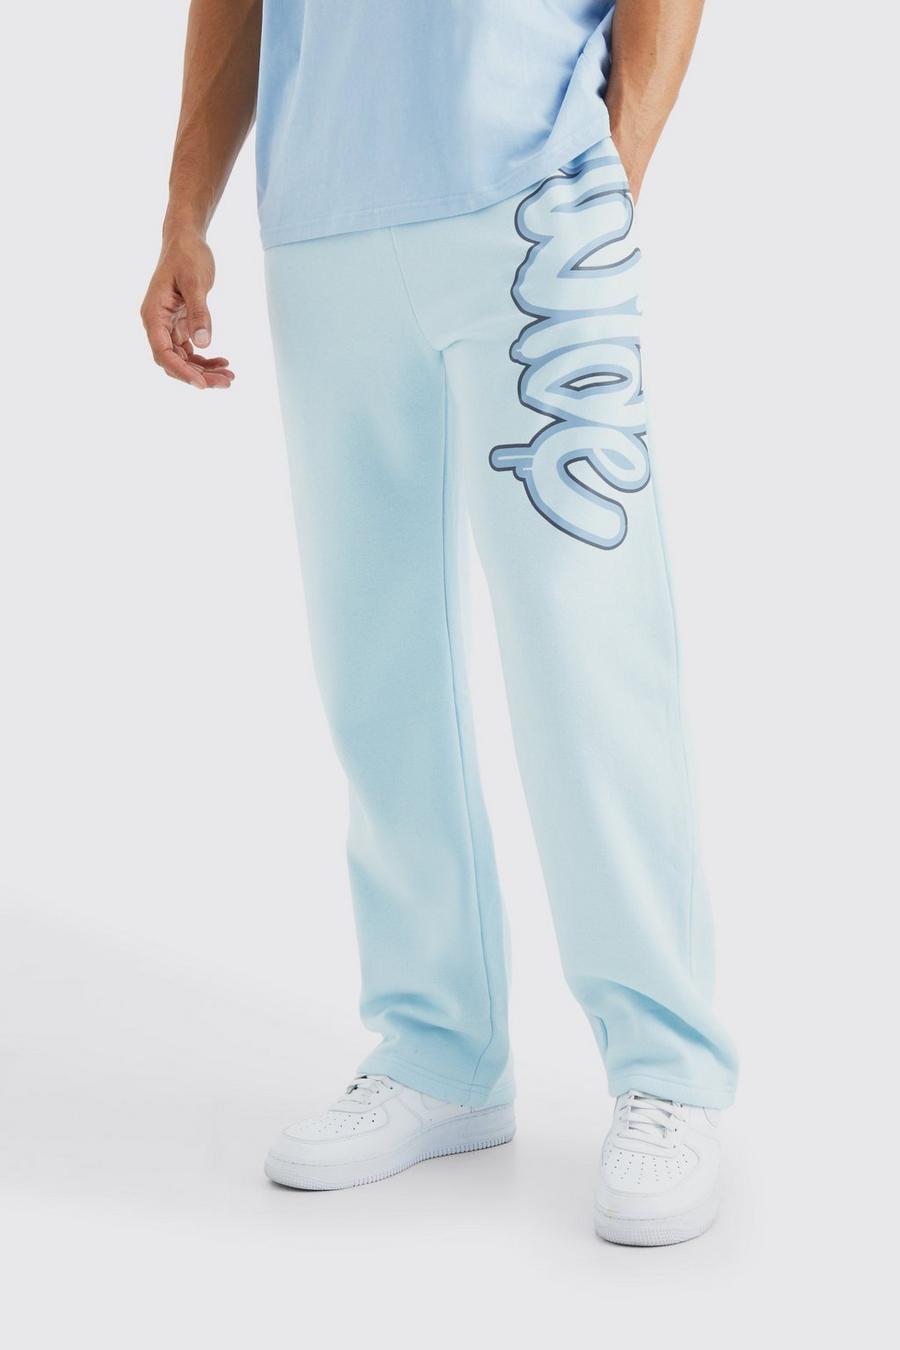 Pantalón deportivo holgado con estampado Worldwide de grafiti, Pale blue